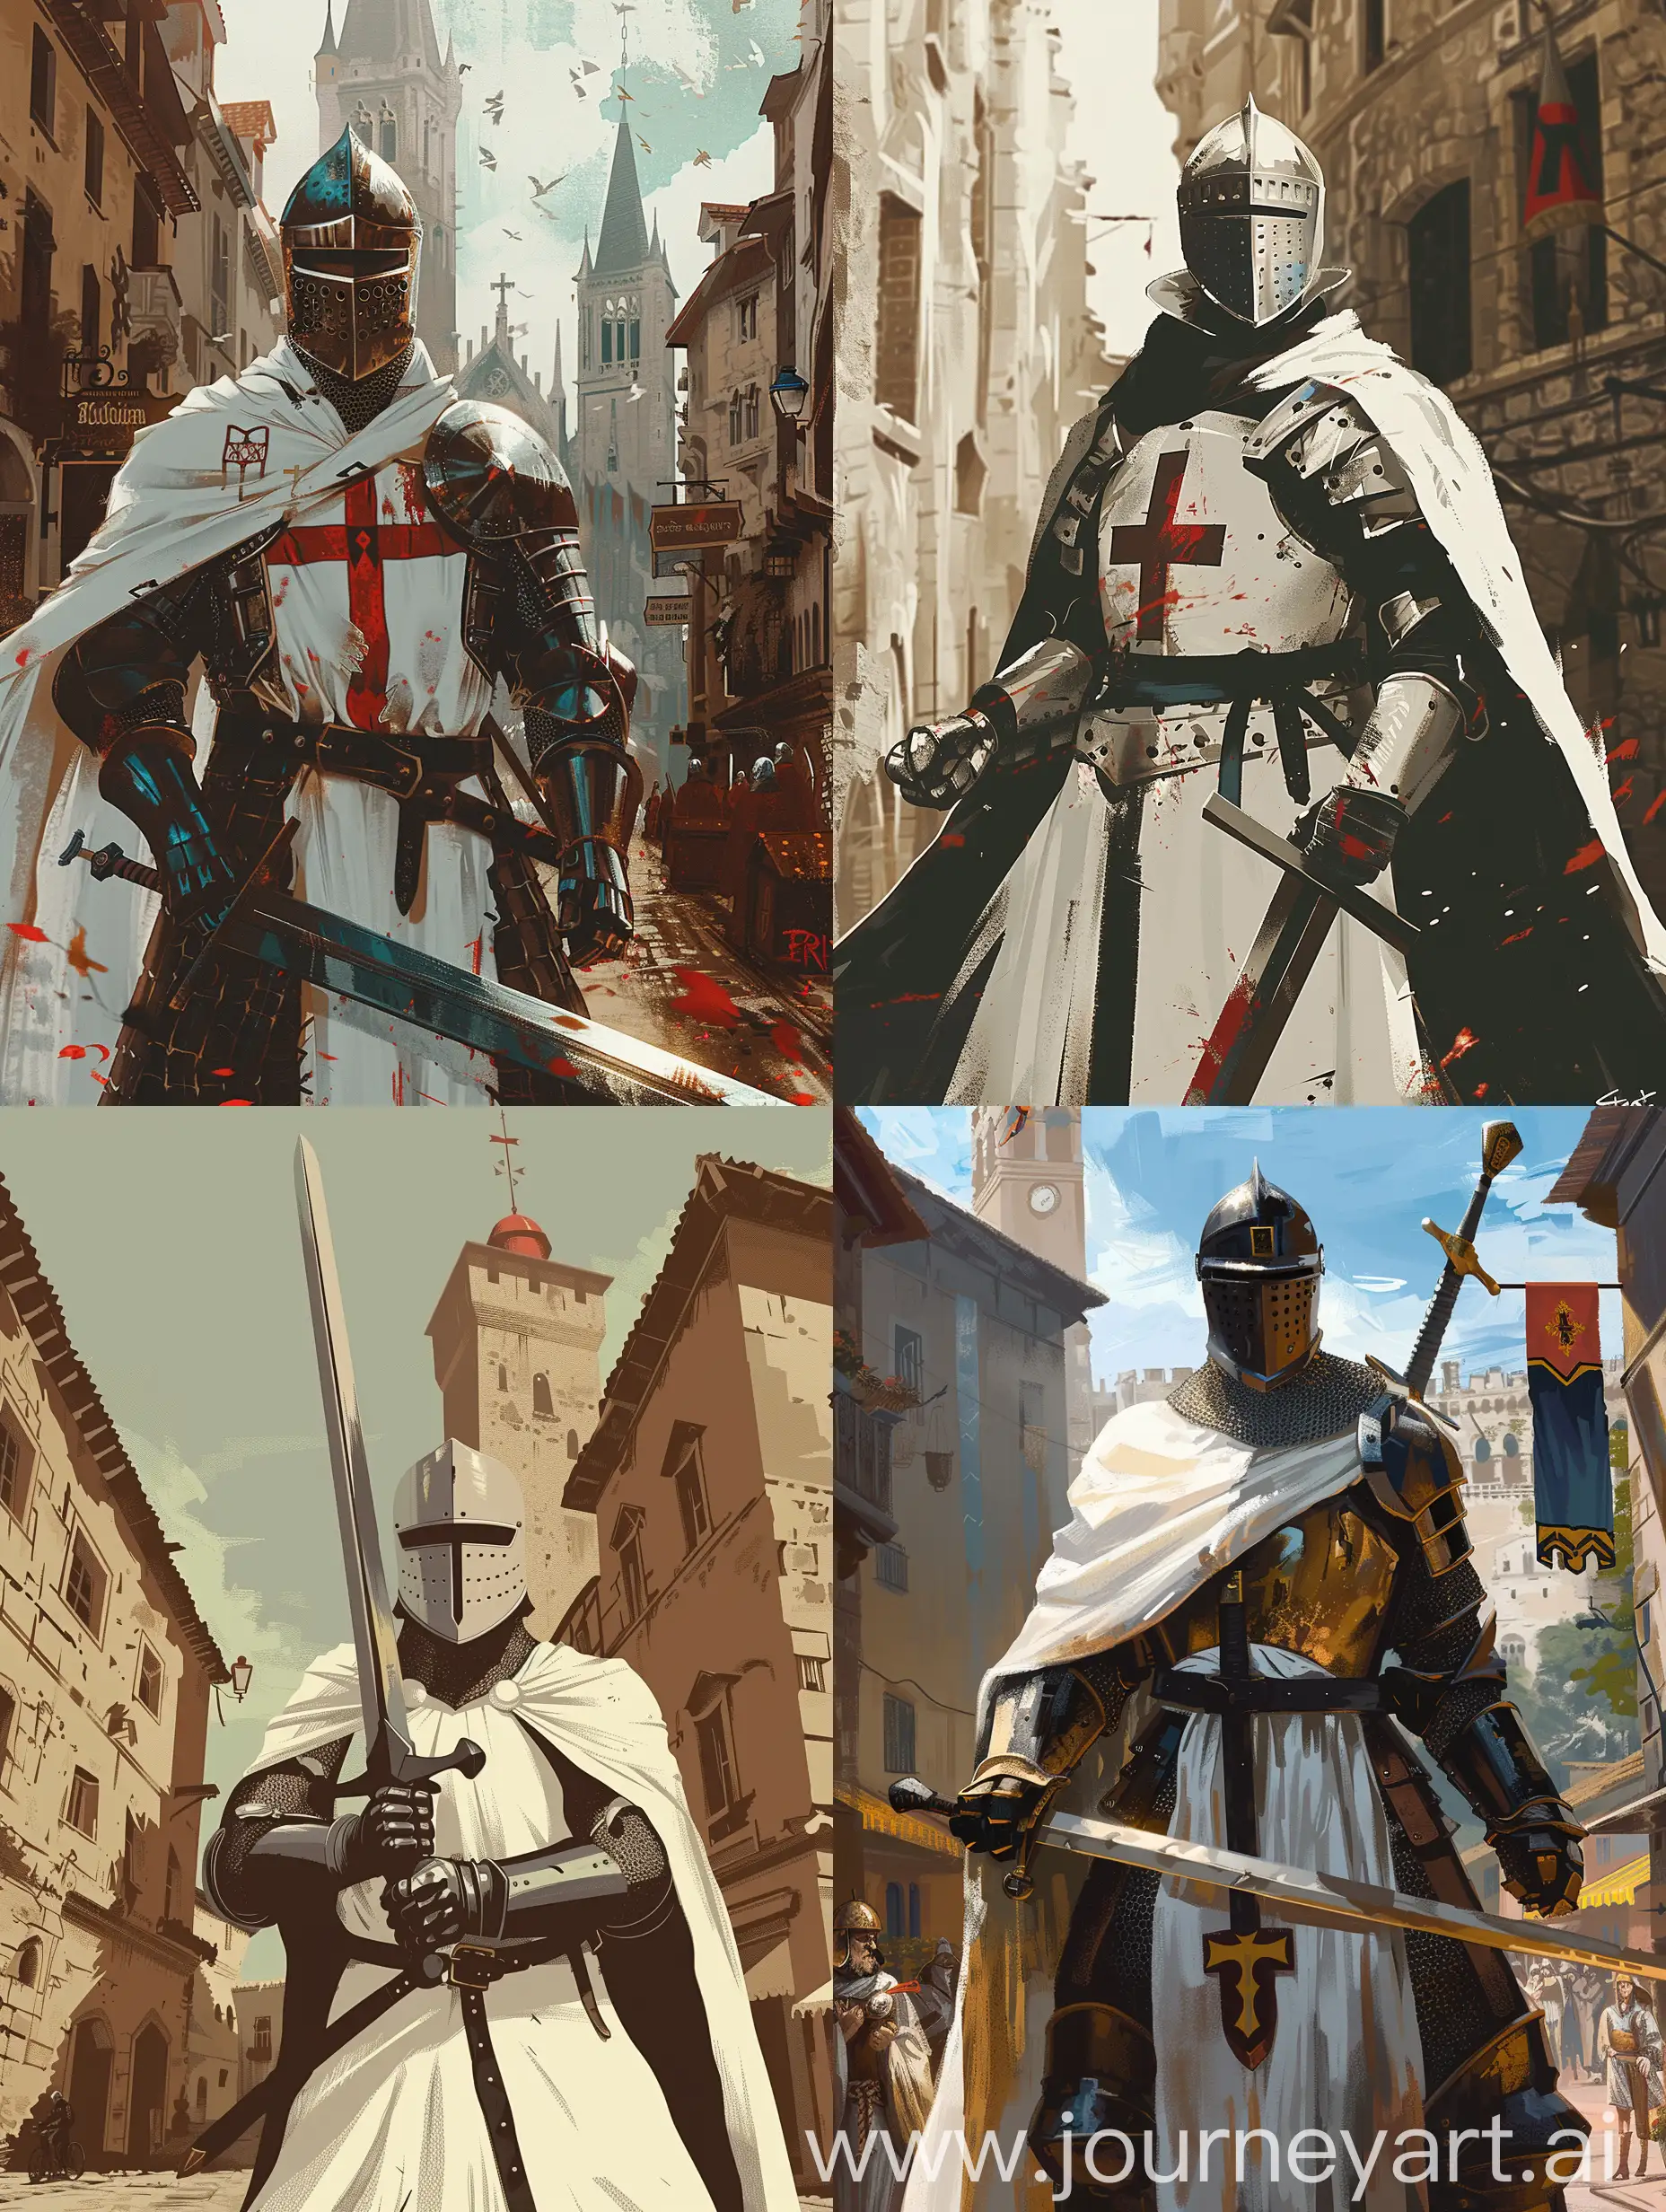 Medieval-Templar-Knight-with-Sword-in-Hand-in-City-Center-Digital-Art